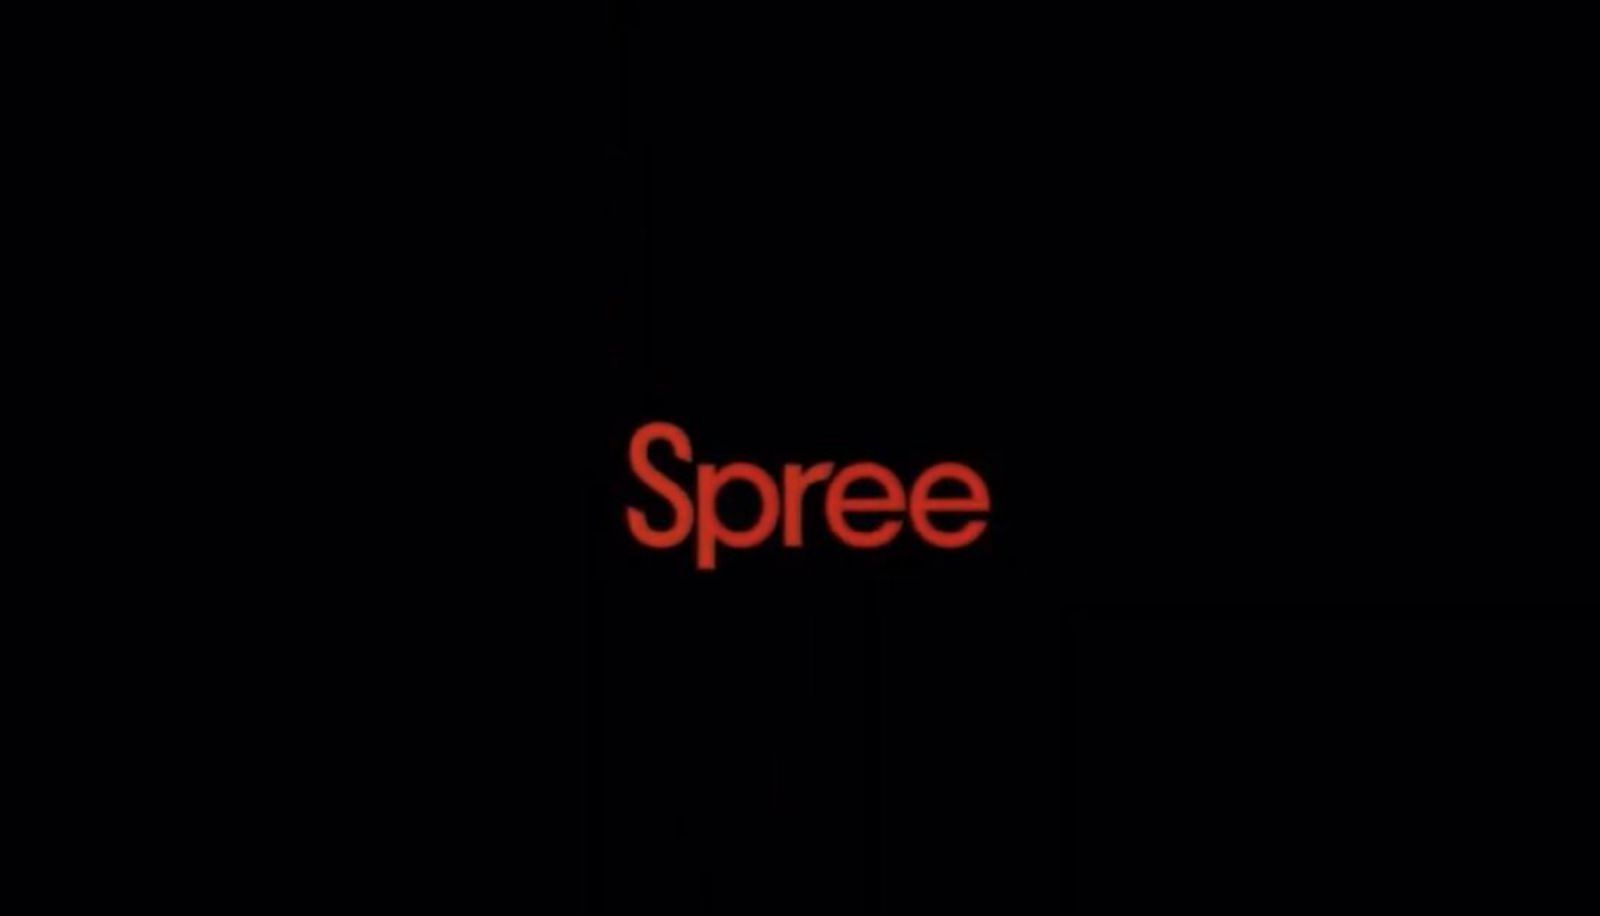 Is Netflix's 'Spree' Based on a True Story? - IMDb